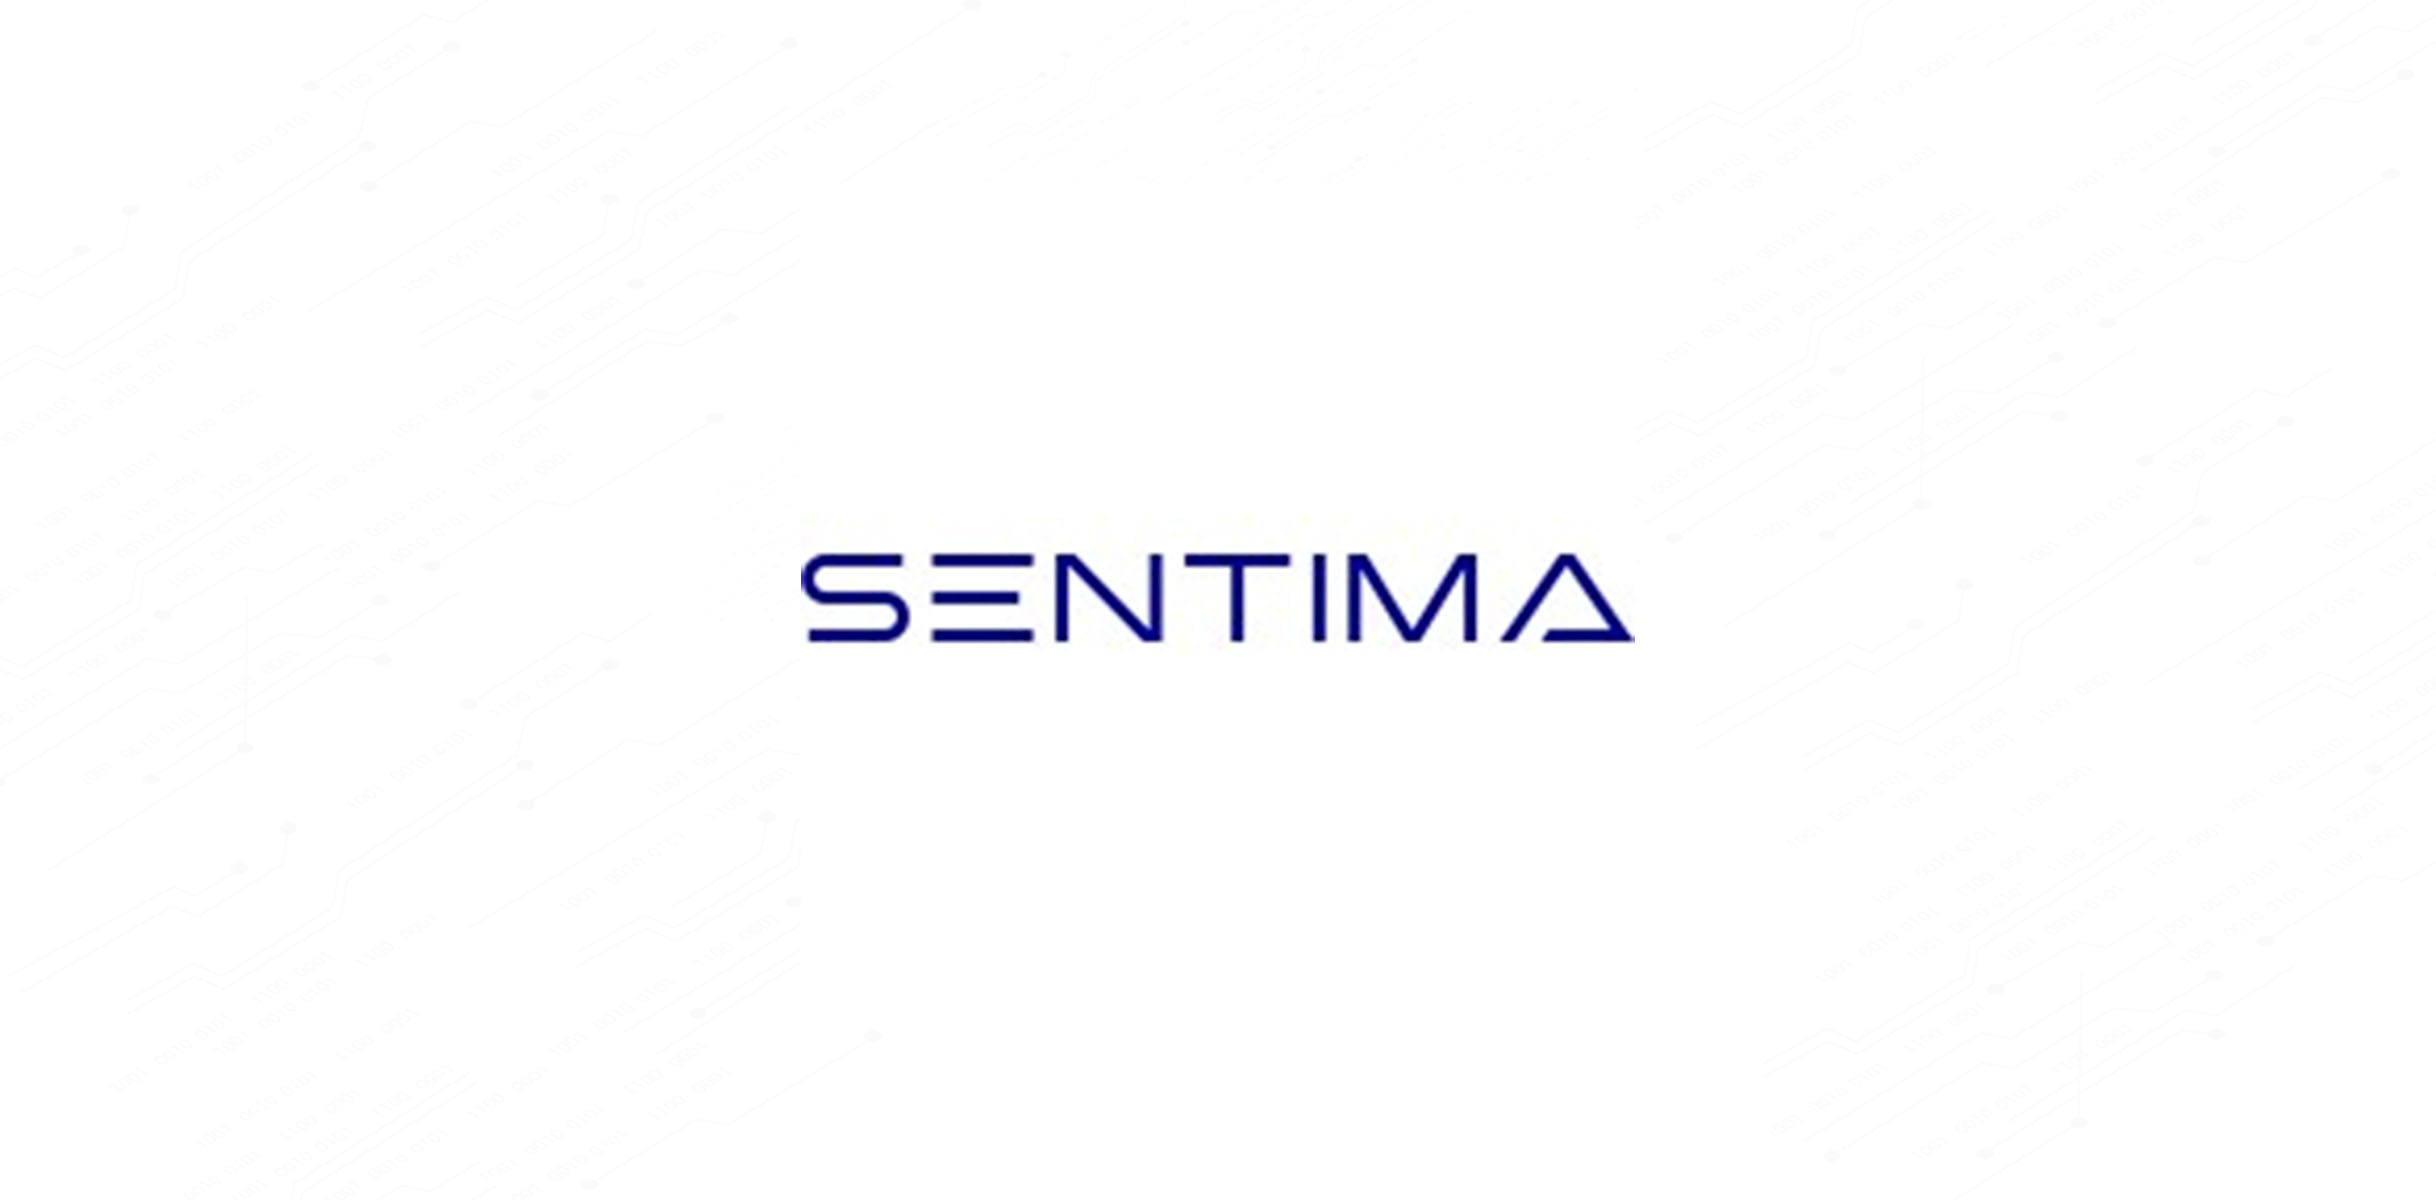 Building the next generation of zero trust with Sentima